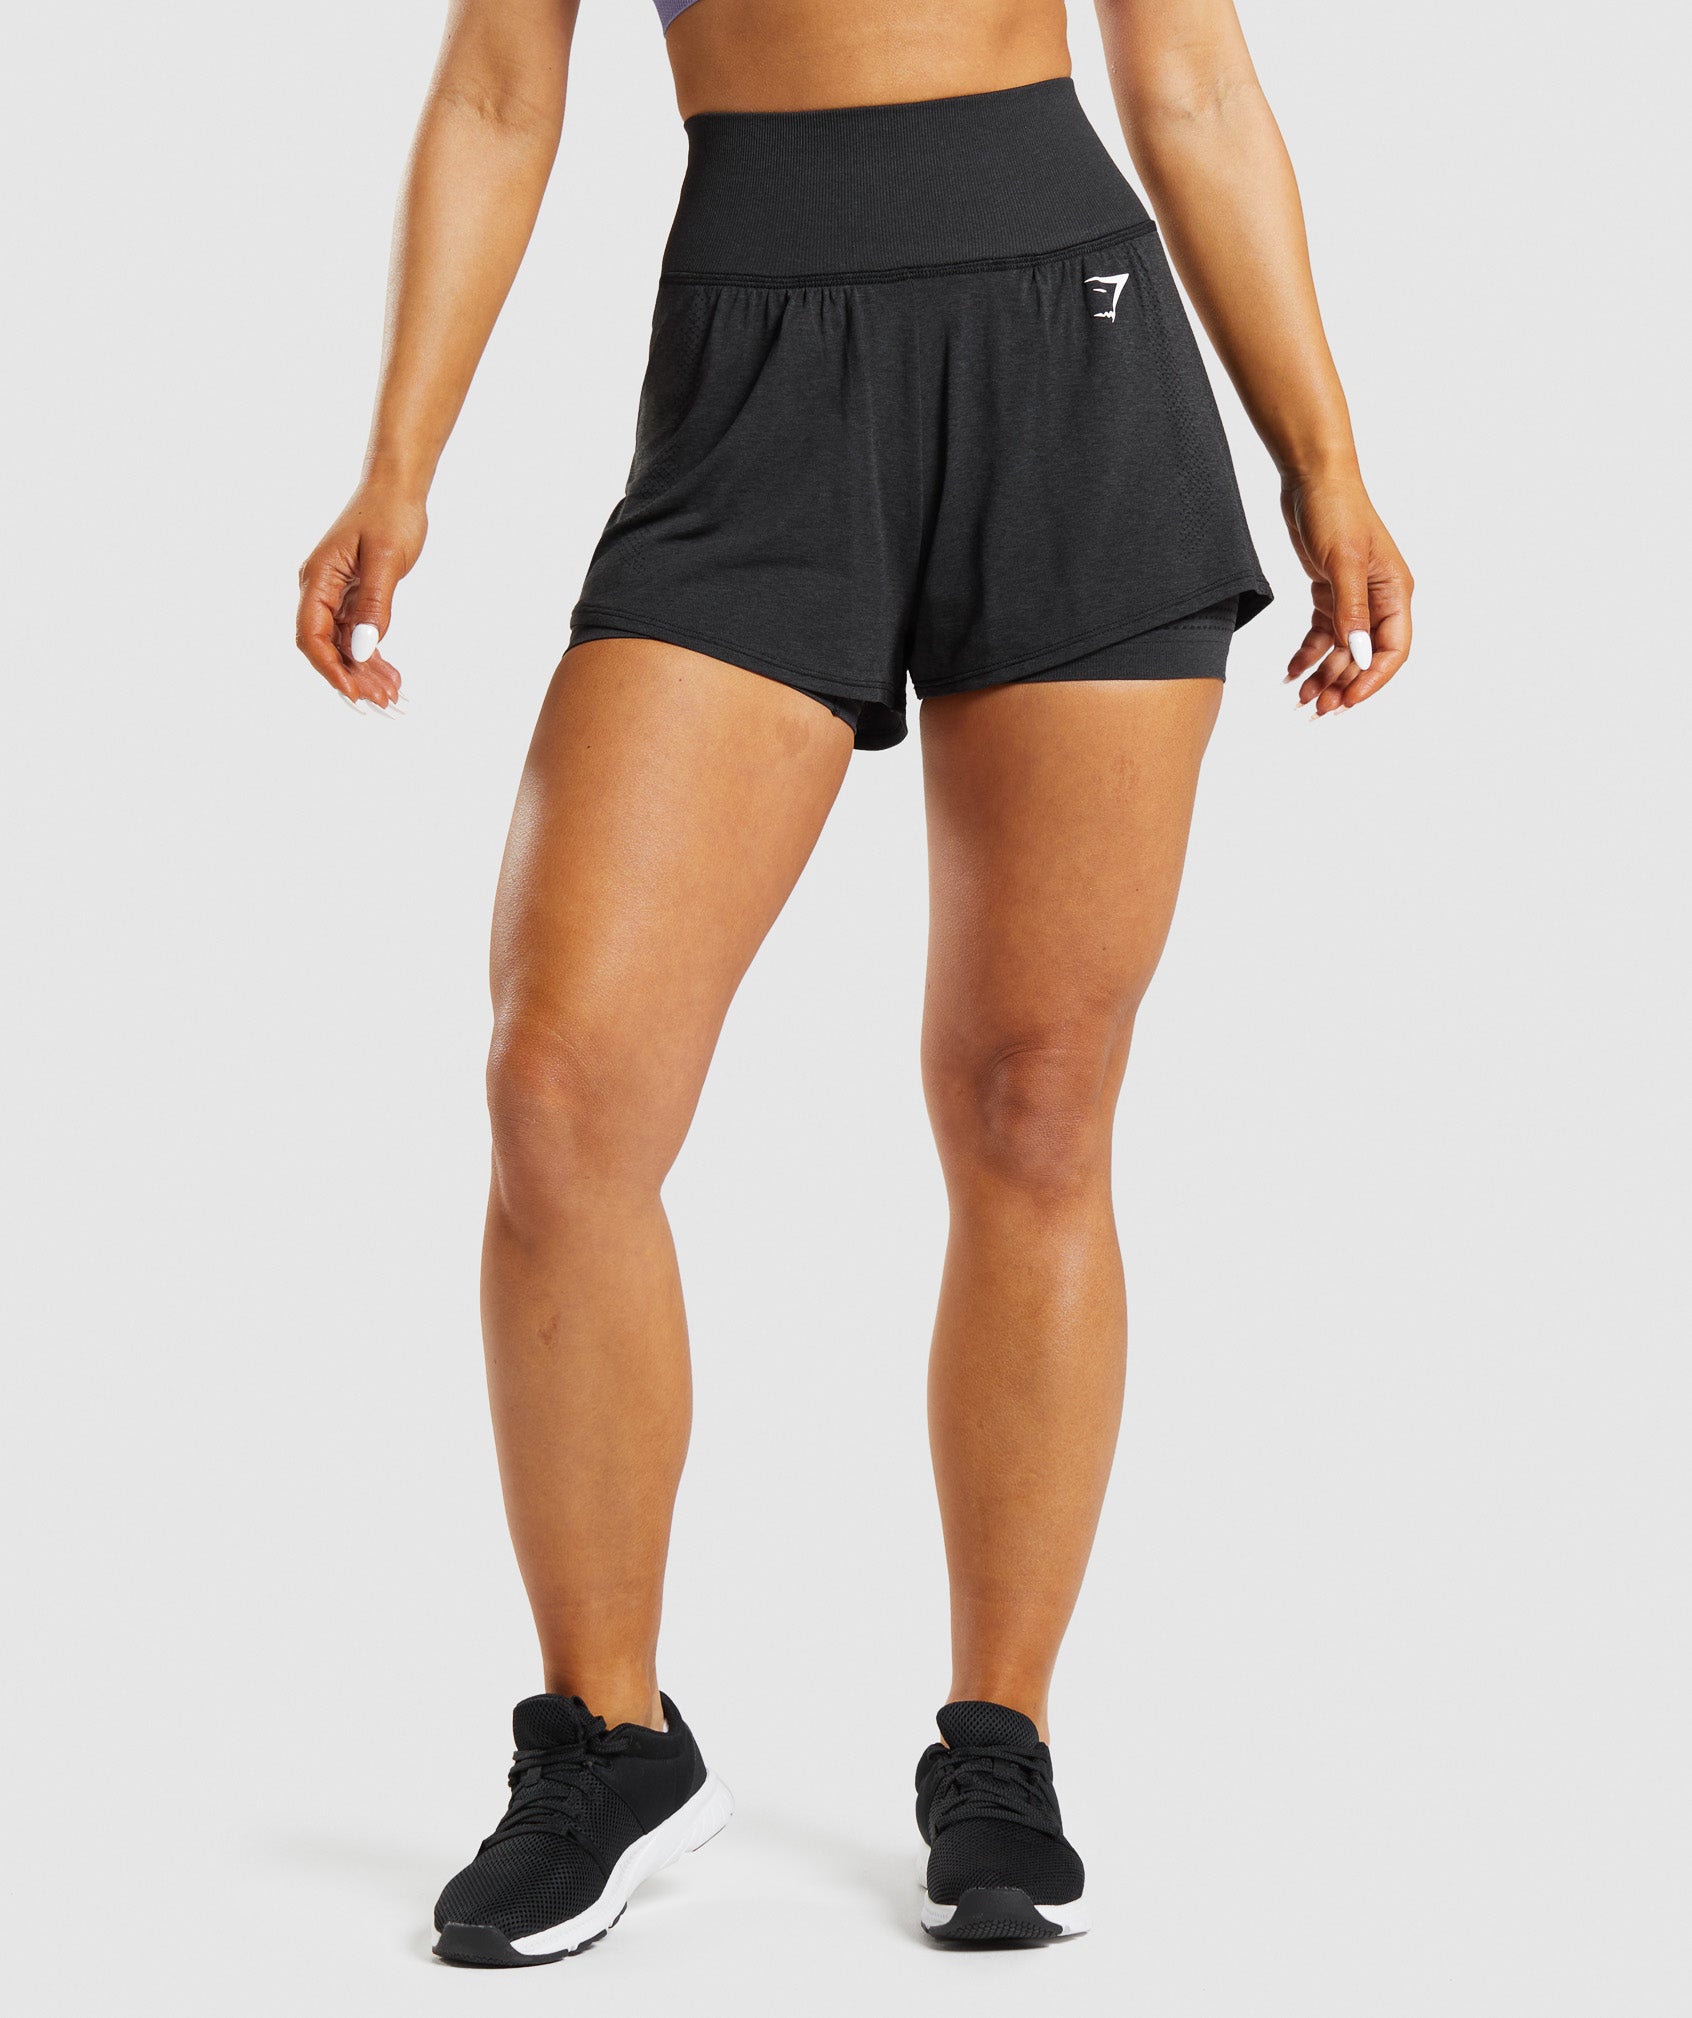 100+ affordable gymshark vital seamless shorts For Sale